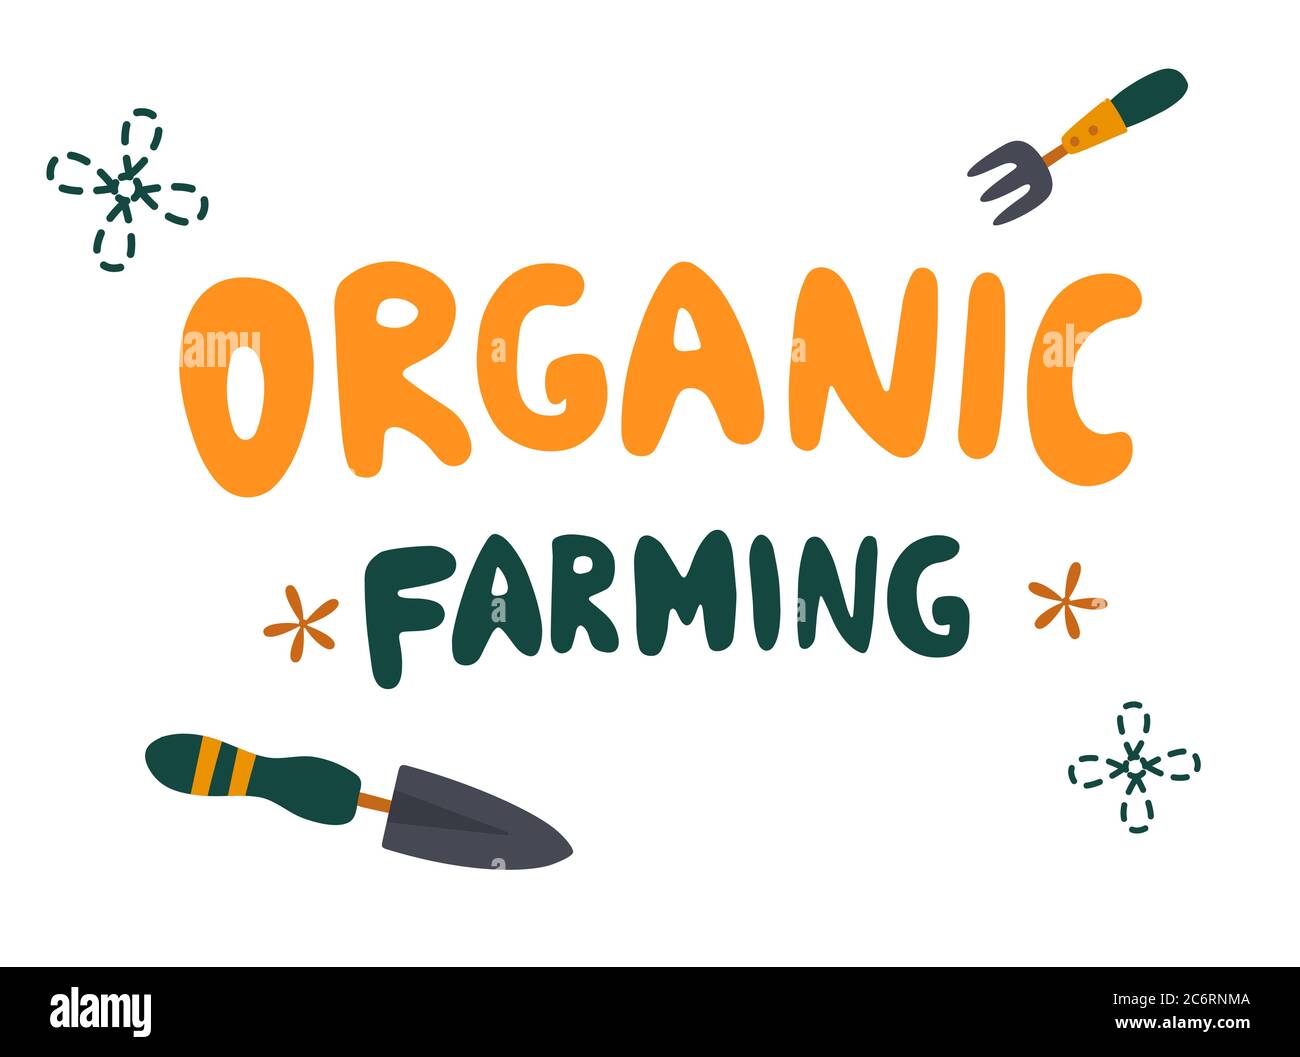 Organic farming. Gardening letterings. Local organic production cartoon vector illustration. Eat Local - vector print and lettering. Stock Vector